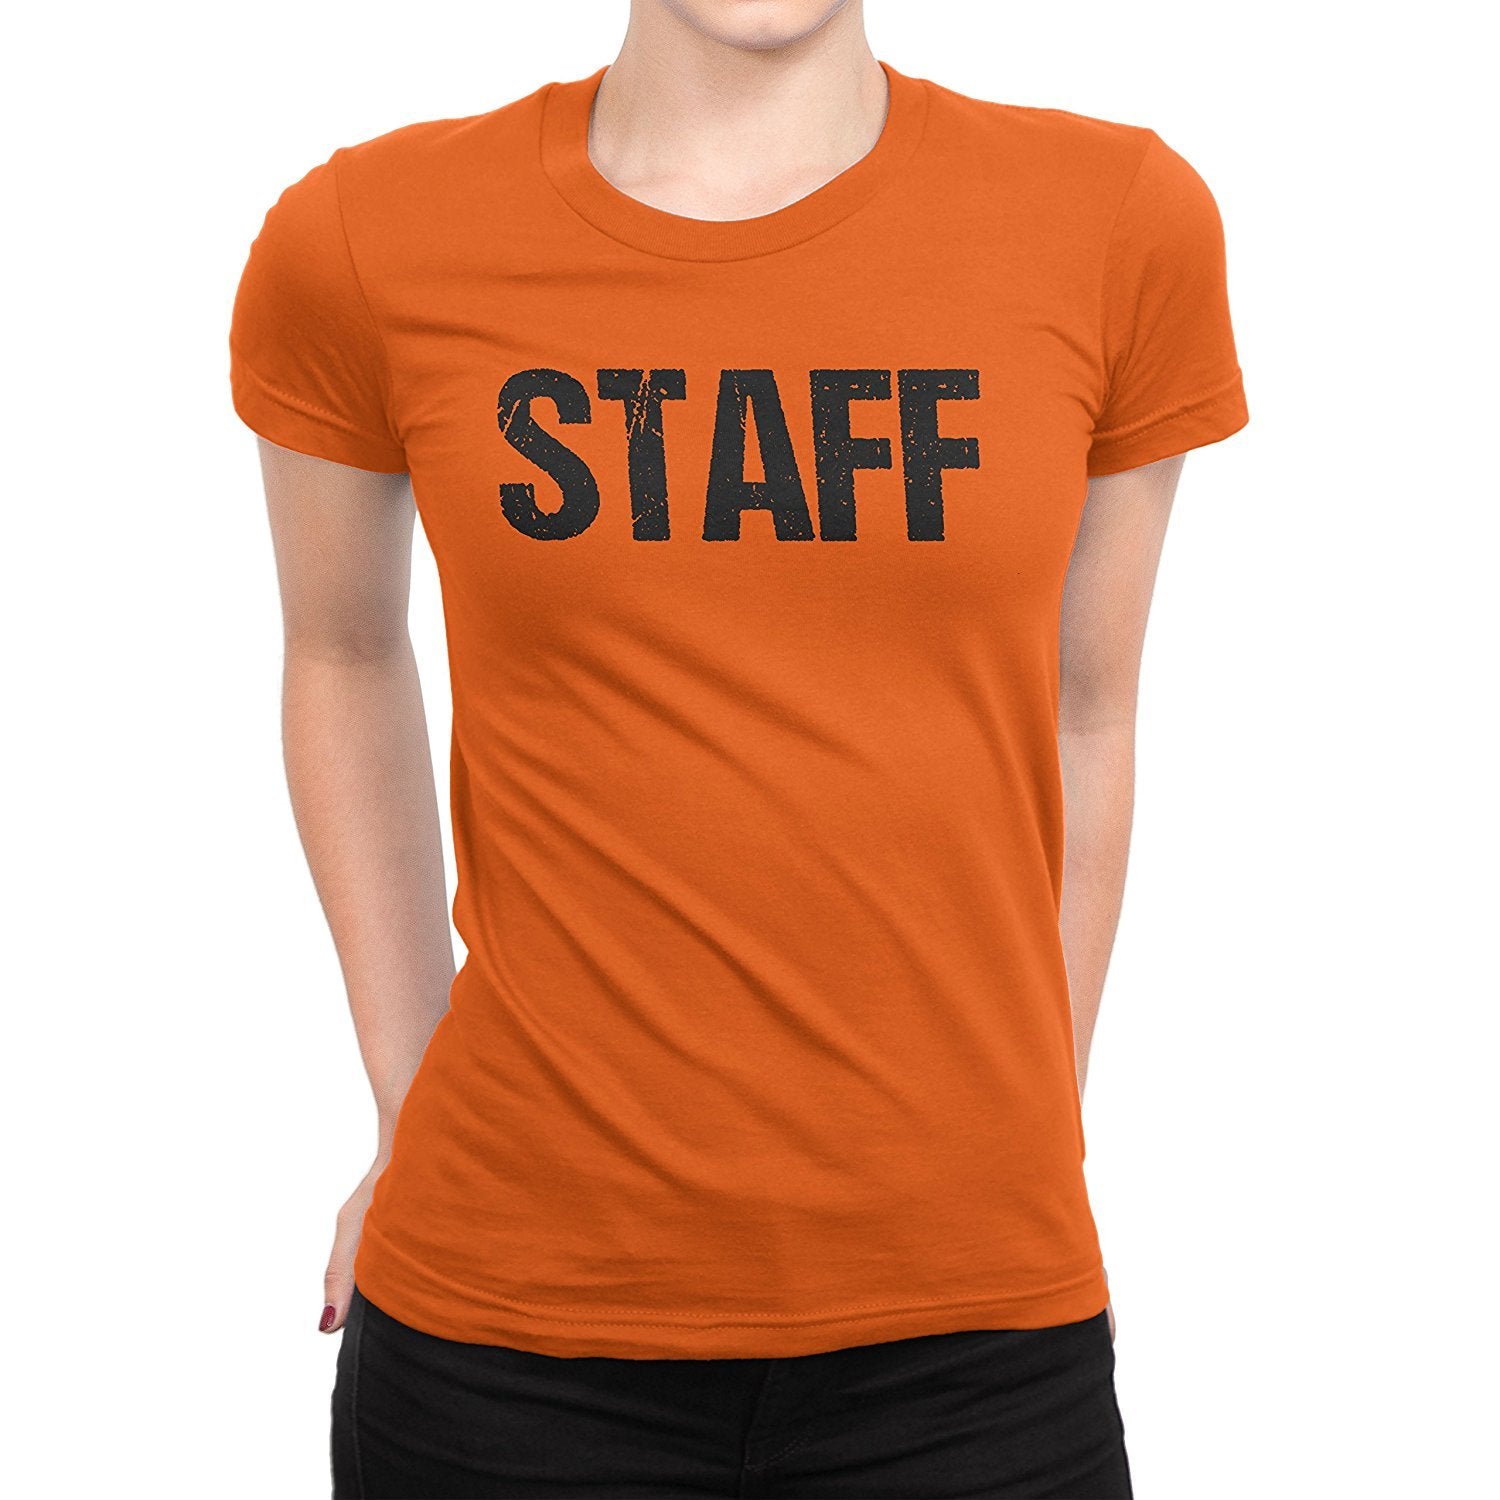 Staff Ladies Short Sleeve T-Shirt (Distressed Design, Orange)